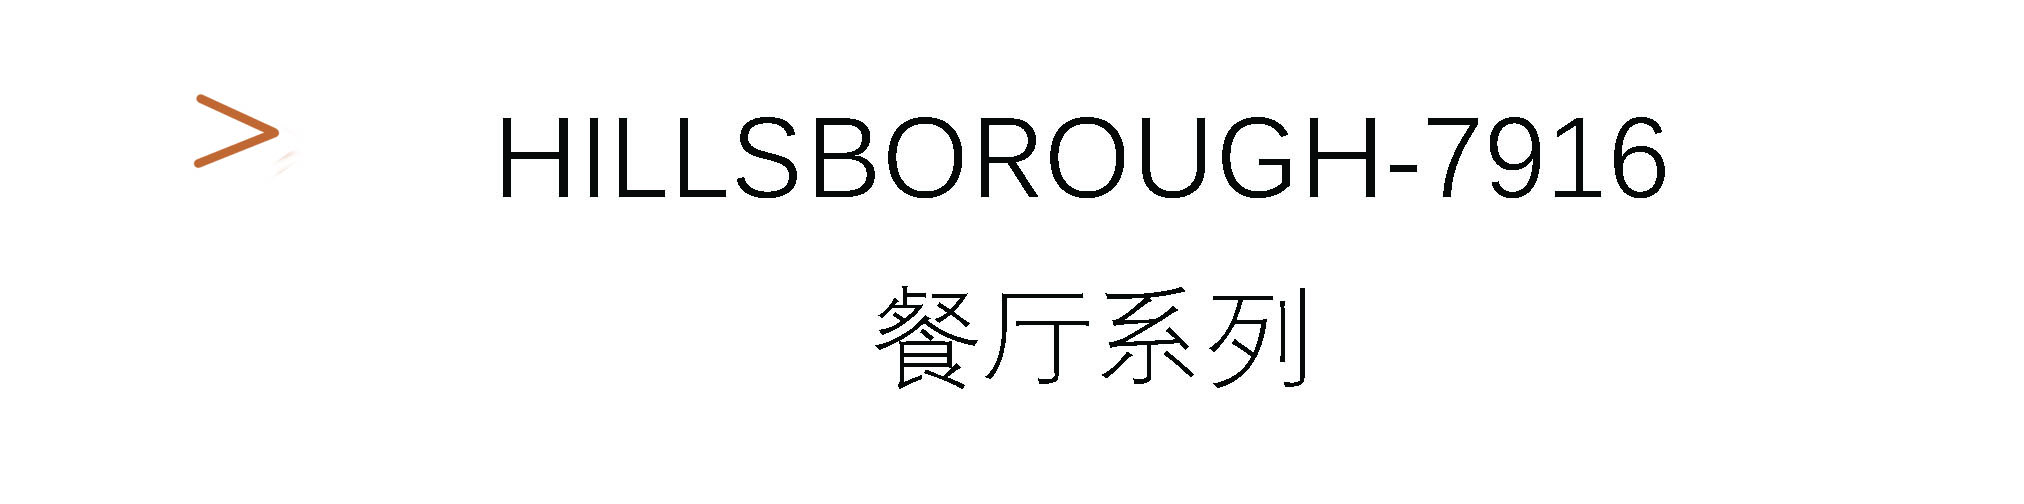 Hillsborough-7916